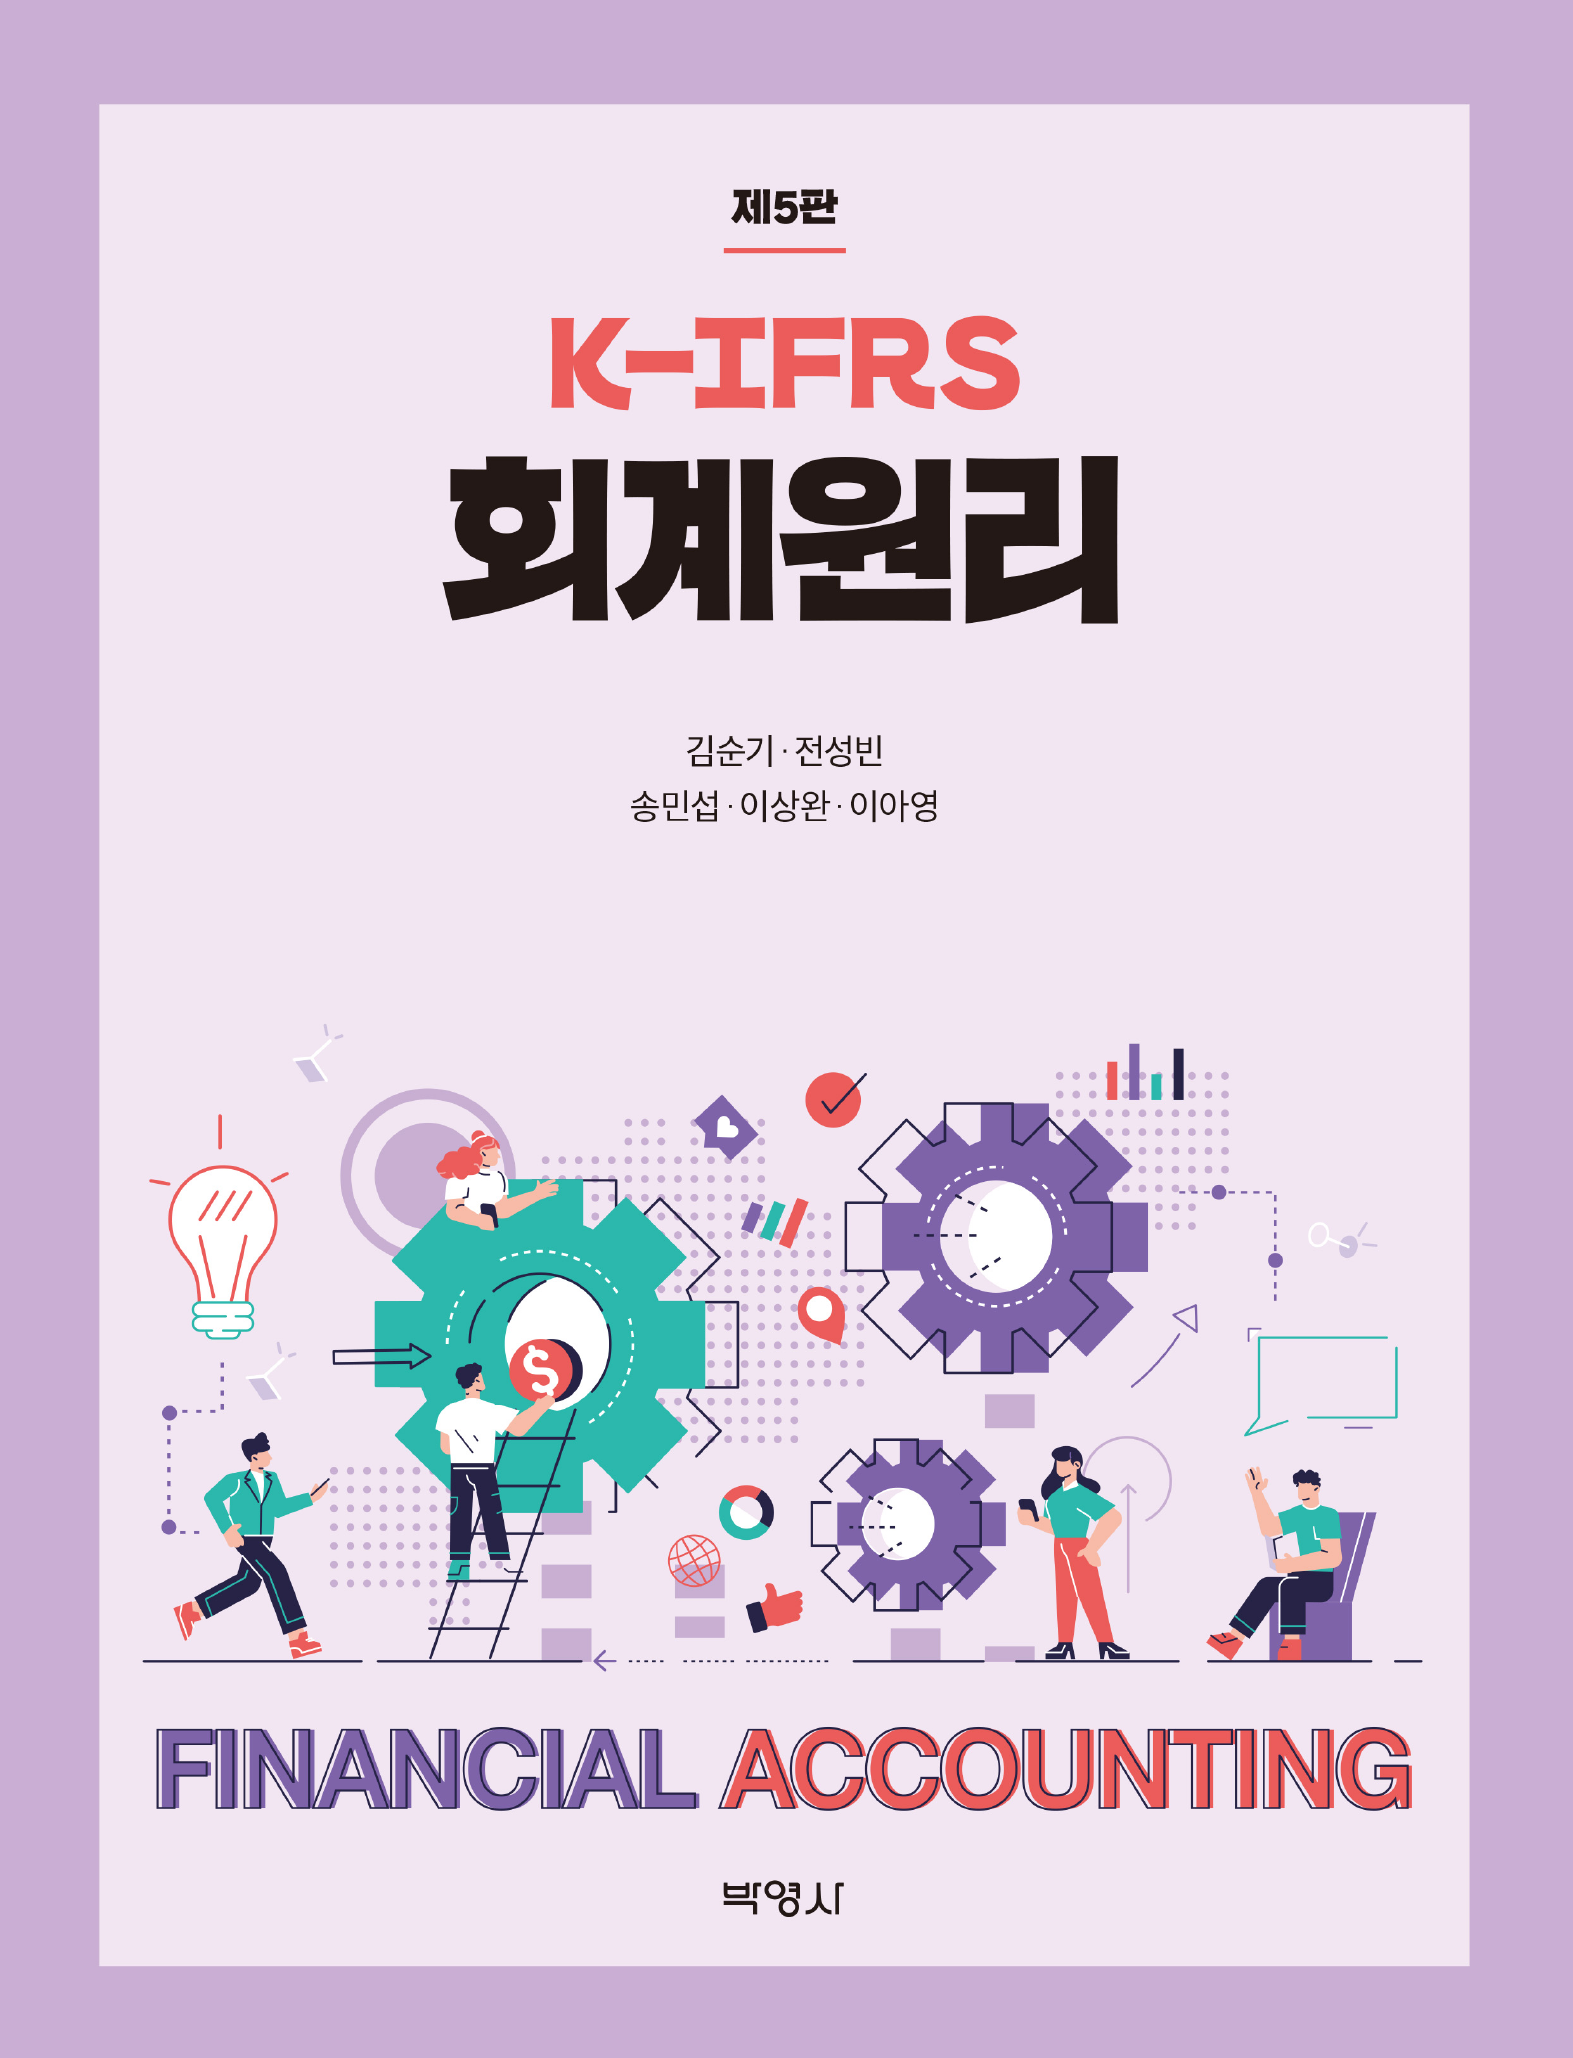 K-IFRS 회계원리 5판